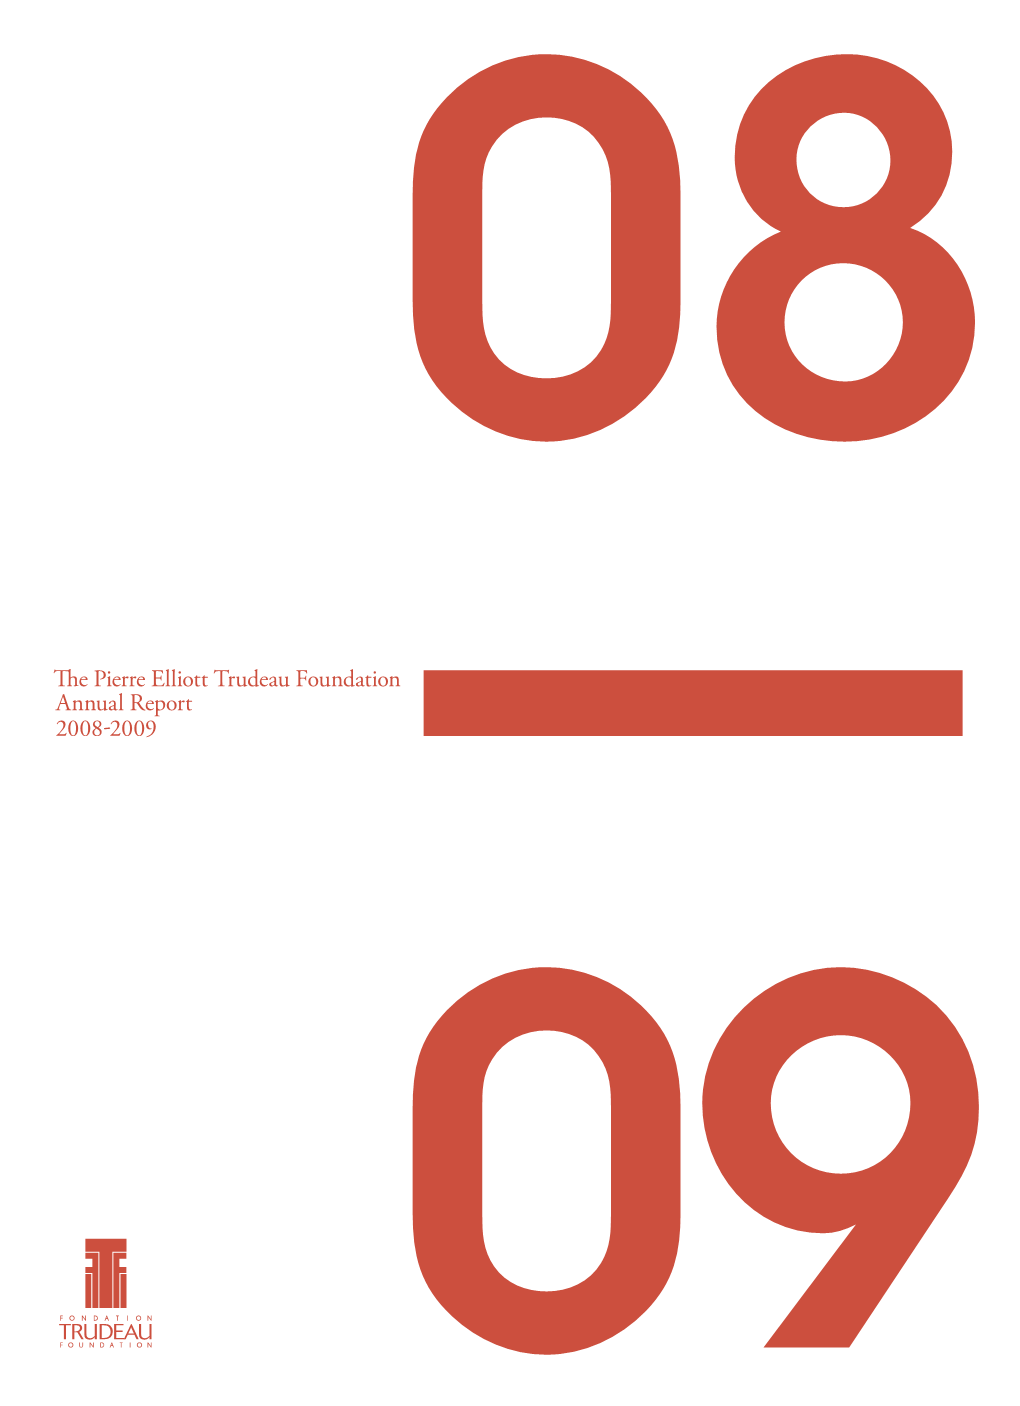 The Pierre Elliott Trudeau Foundation Annual Report 2008-2009